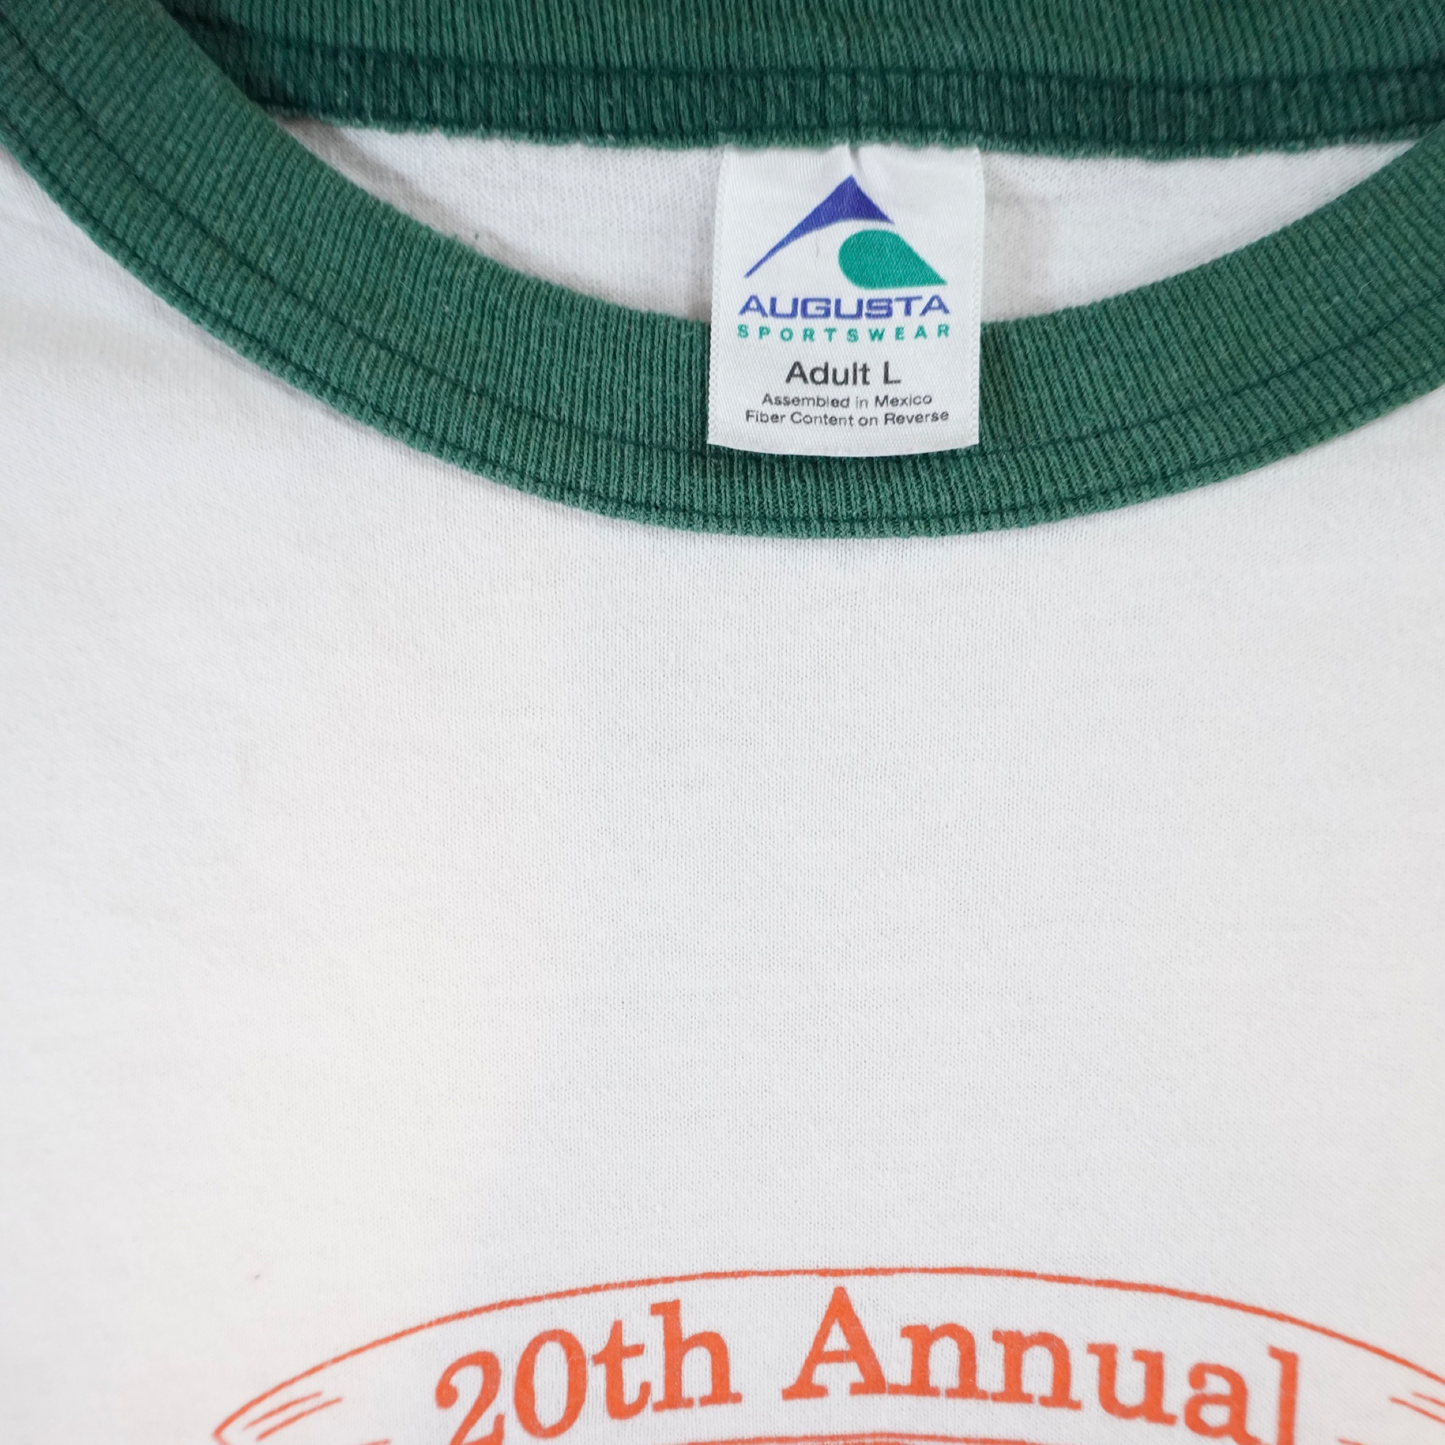 (L) 2005 Johnson County Parks T-shirt